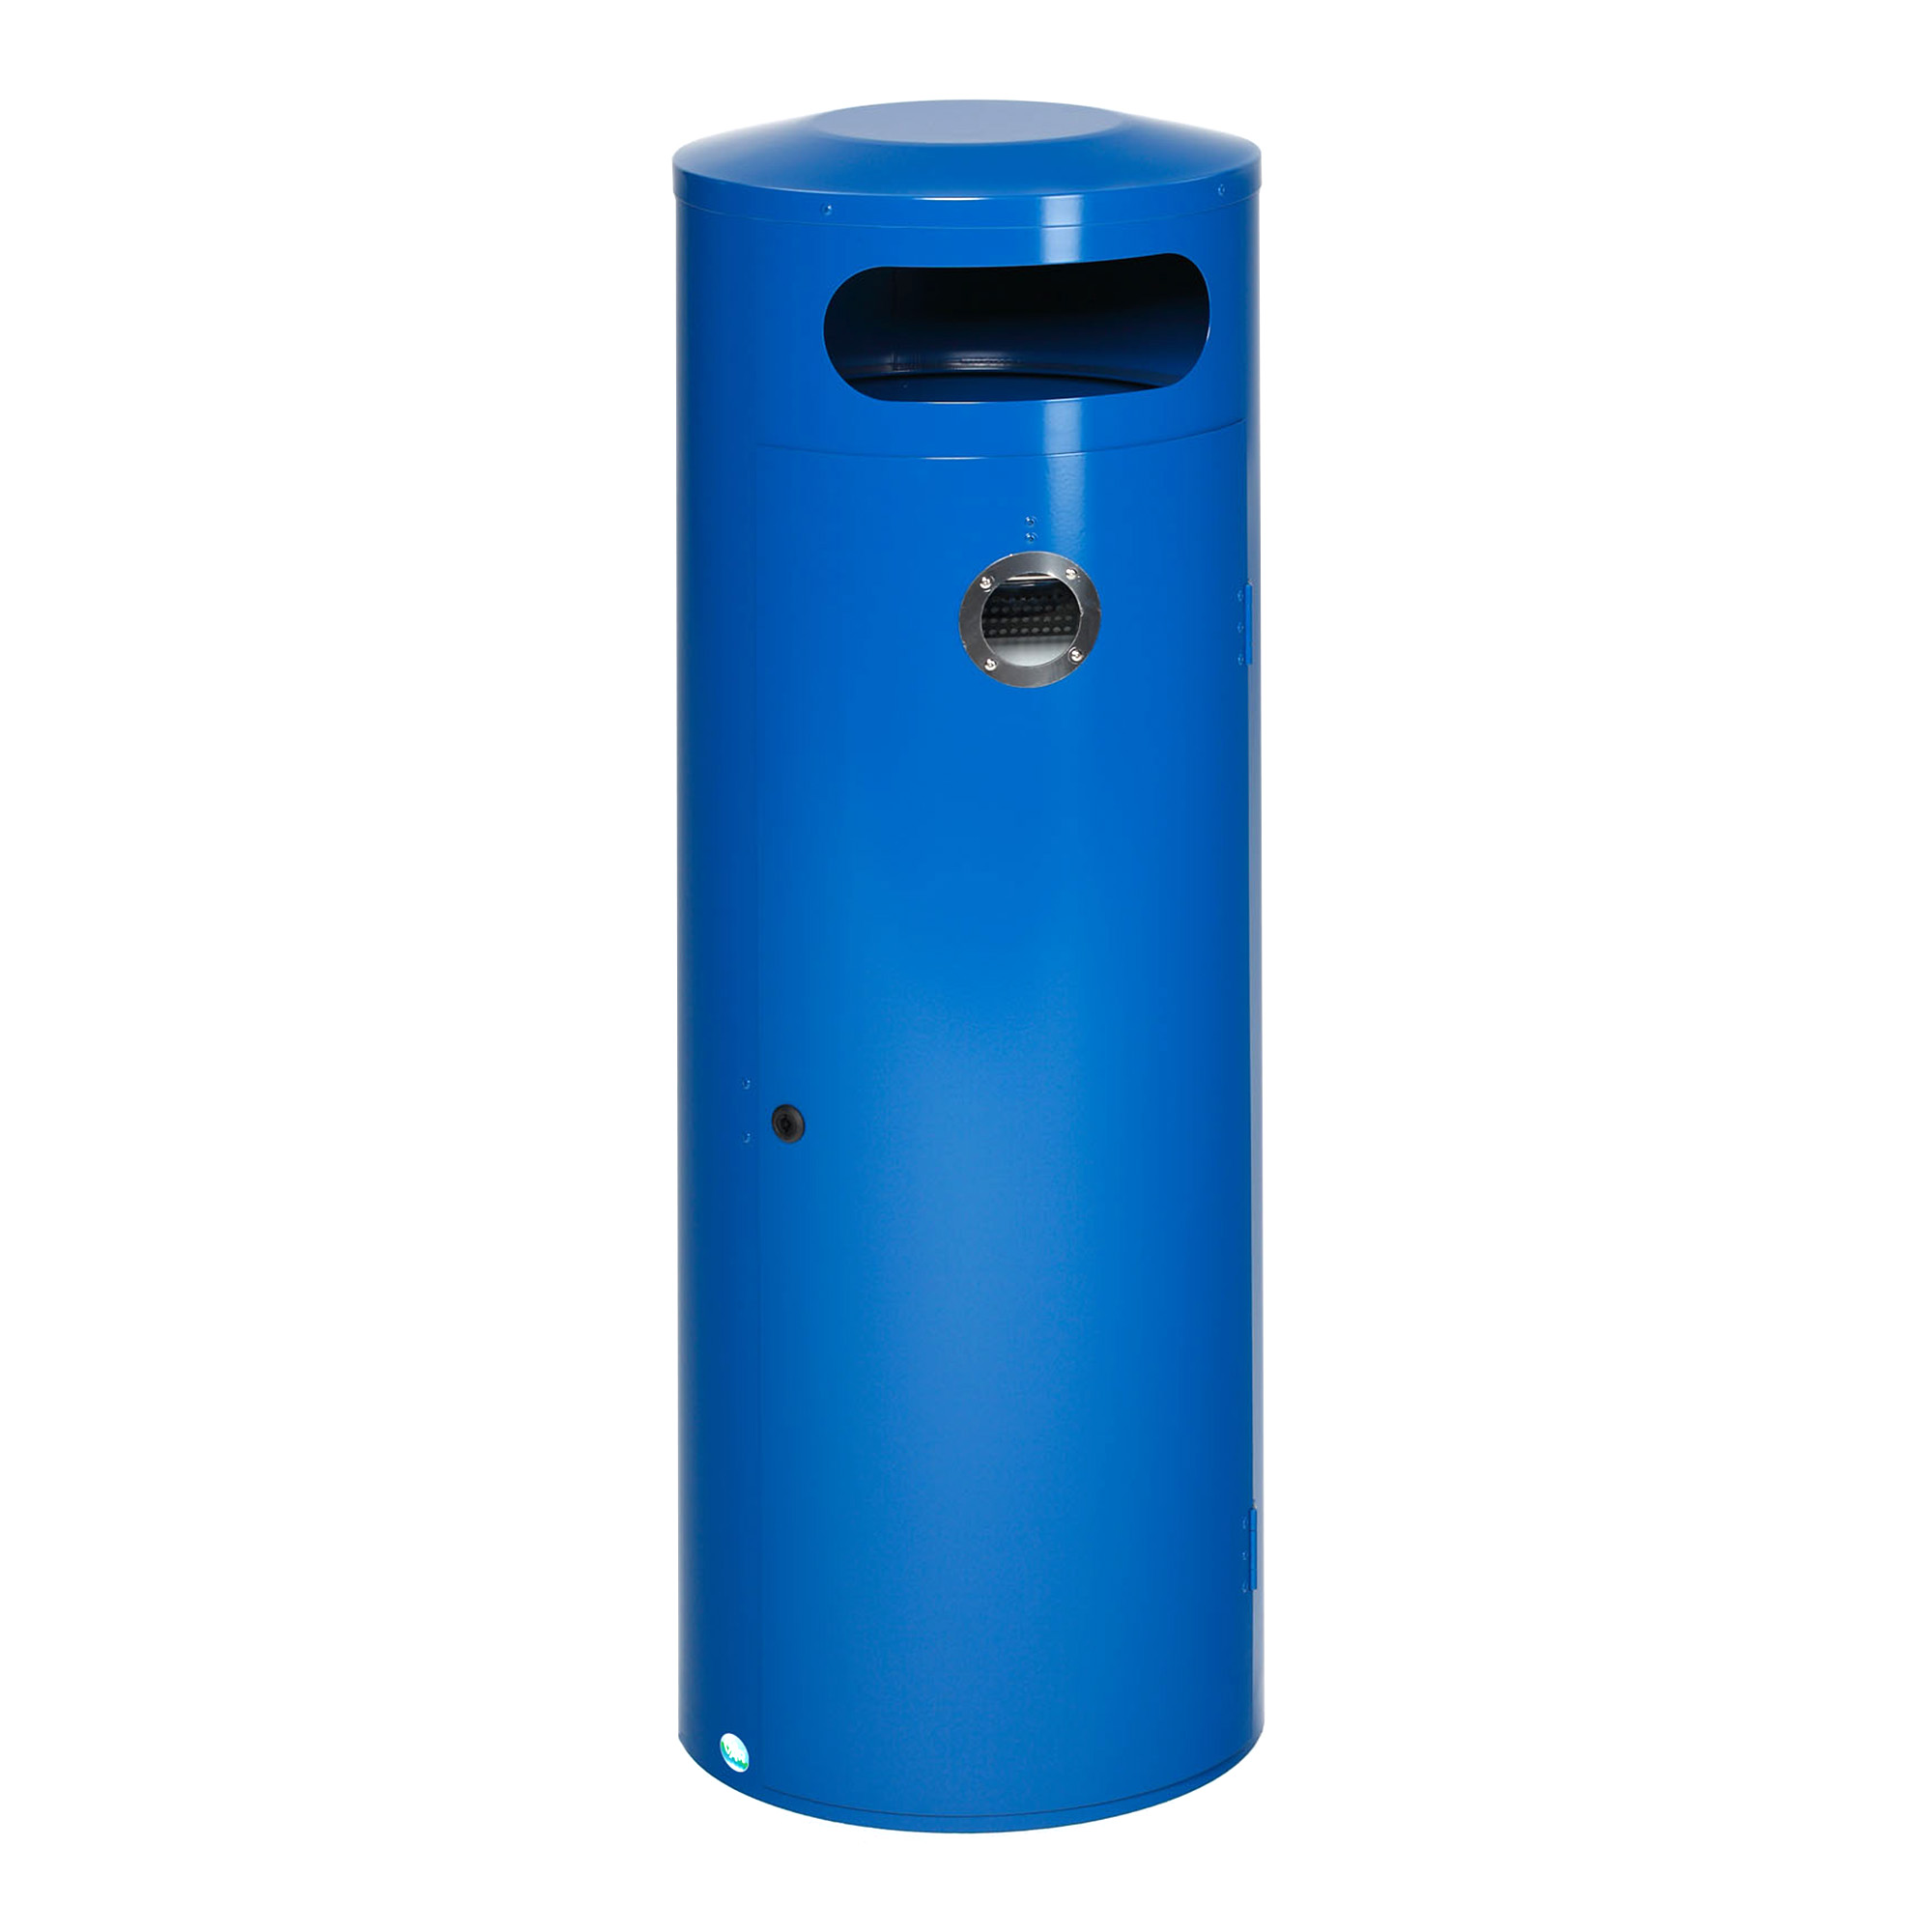 VAR Abfallsammler Ascher KS 90, 90 Liter blau 28441_1